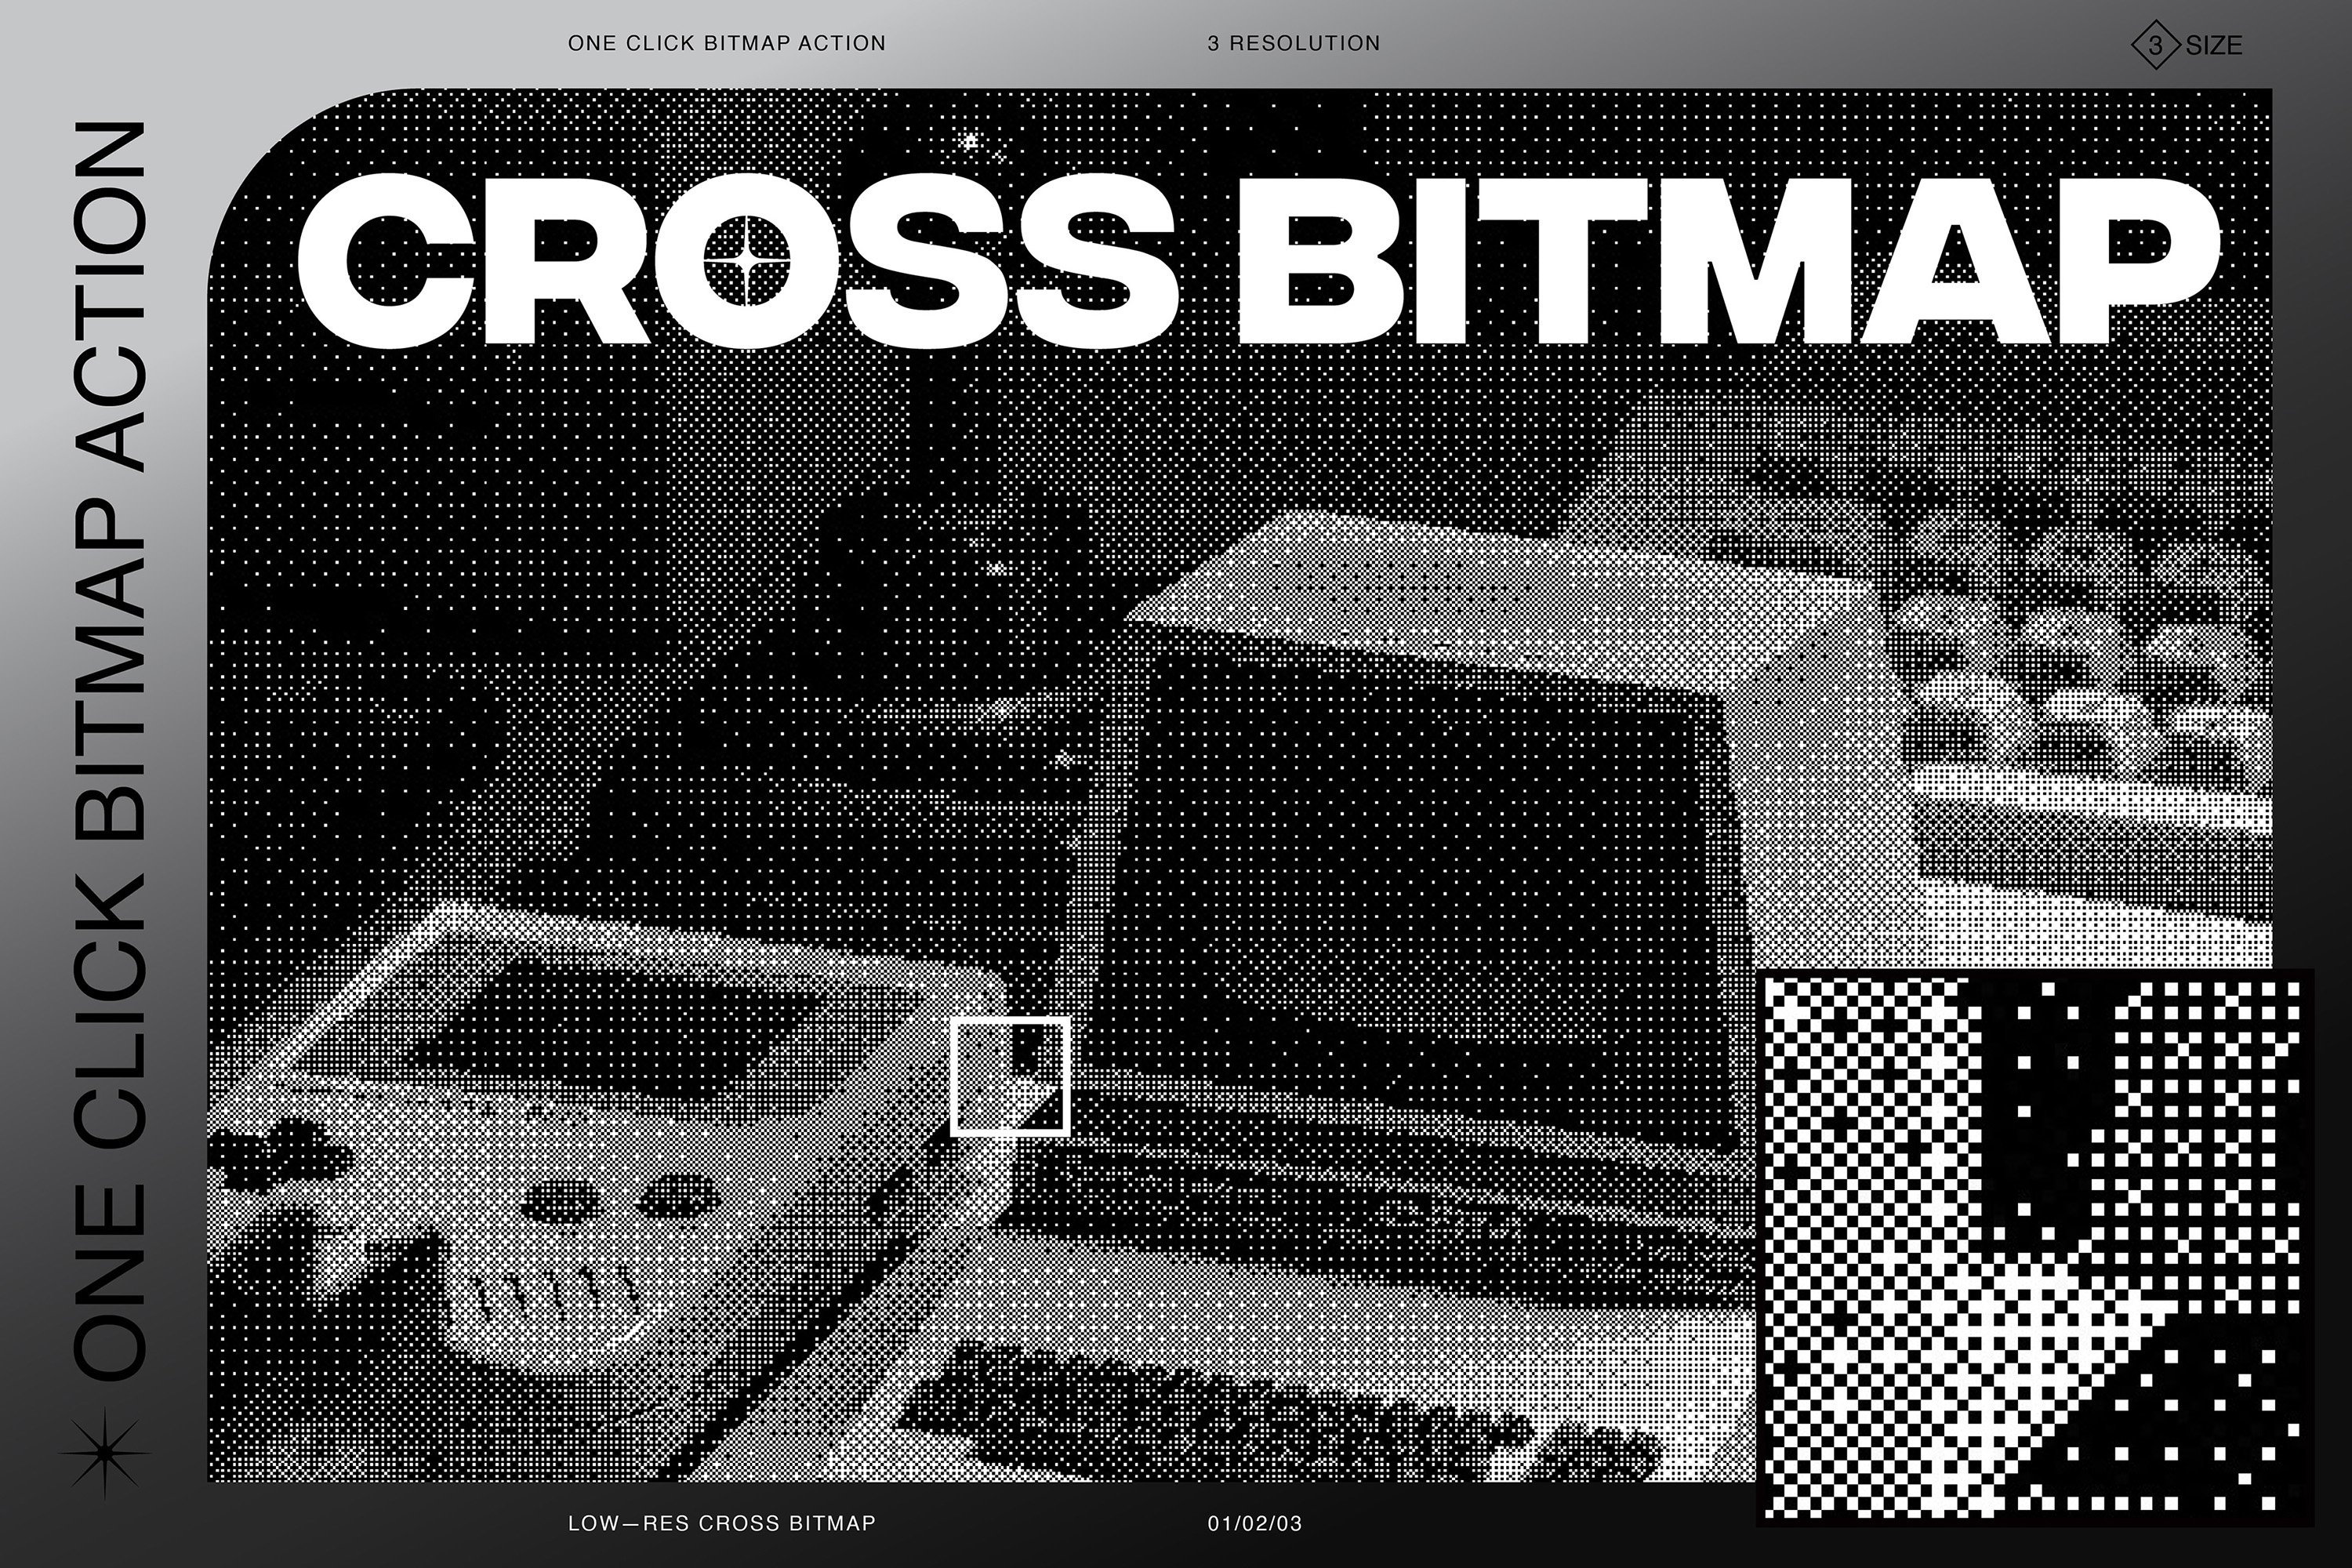 Cross Bitmap Actionpreview image.